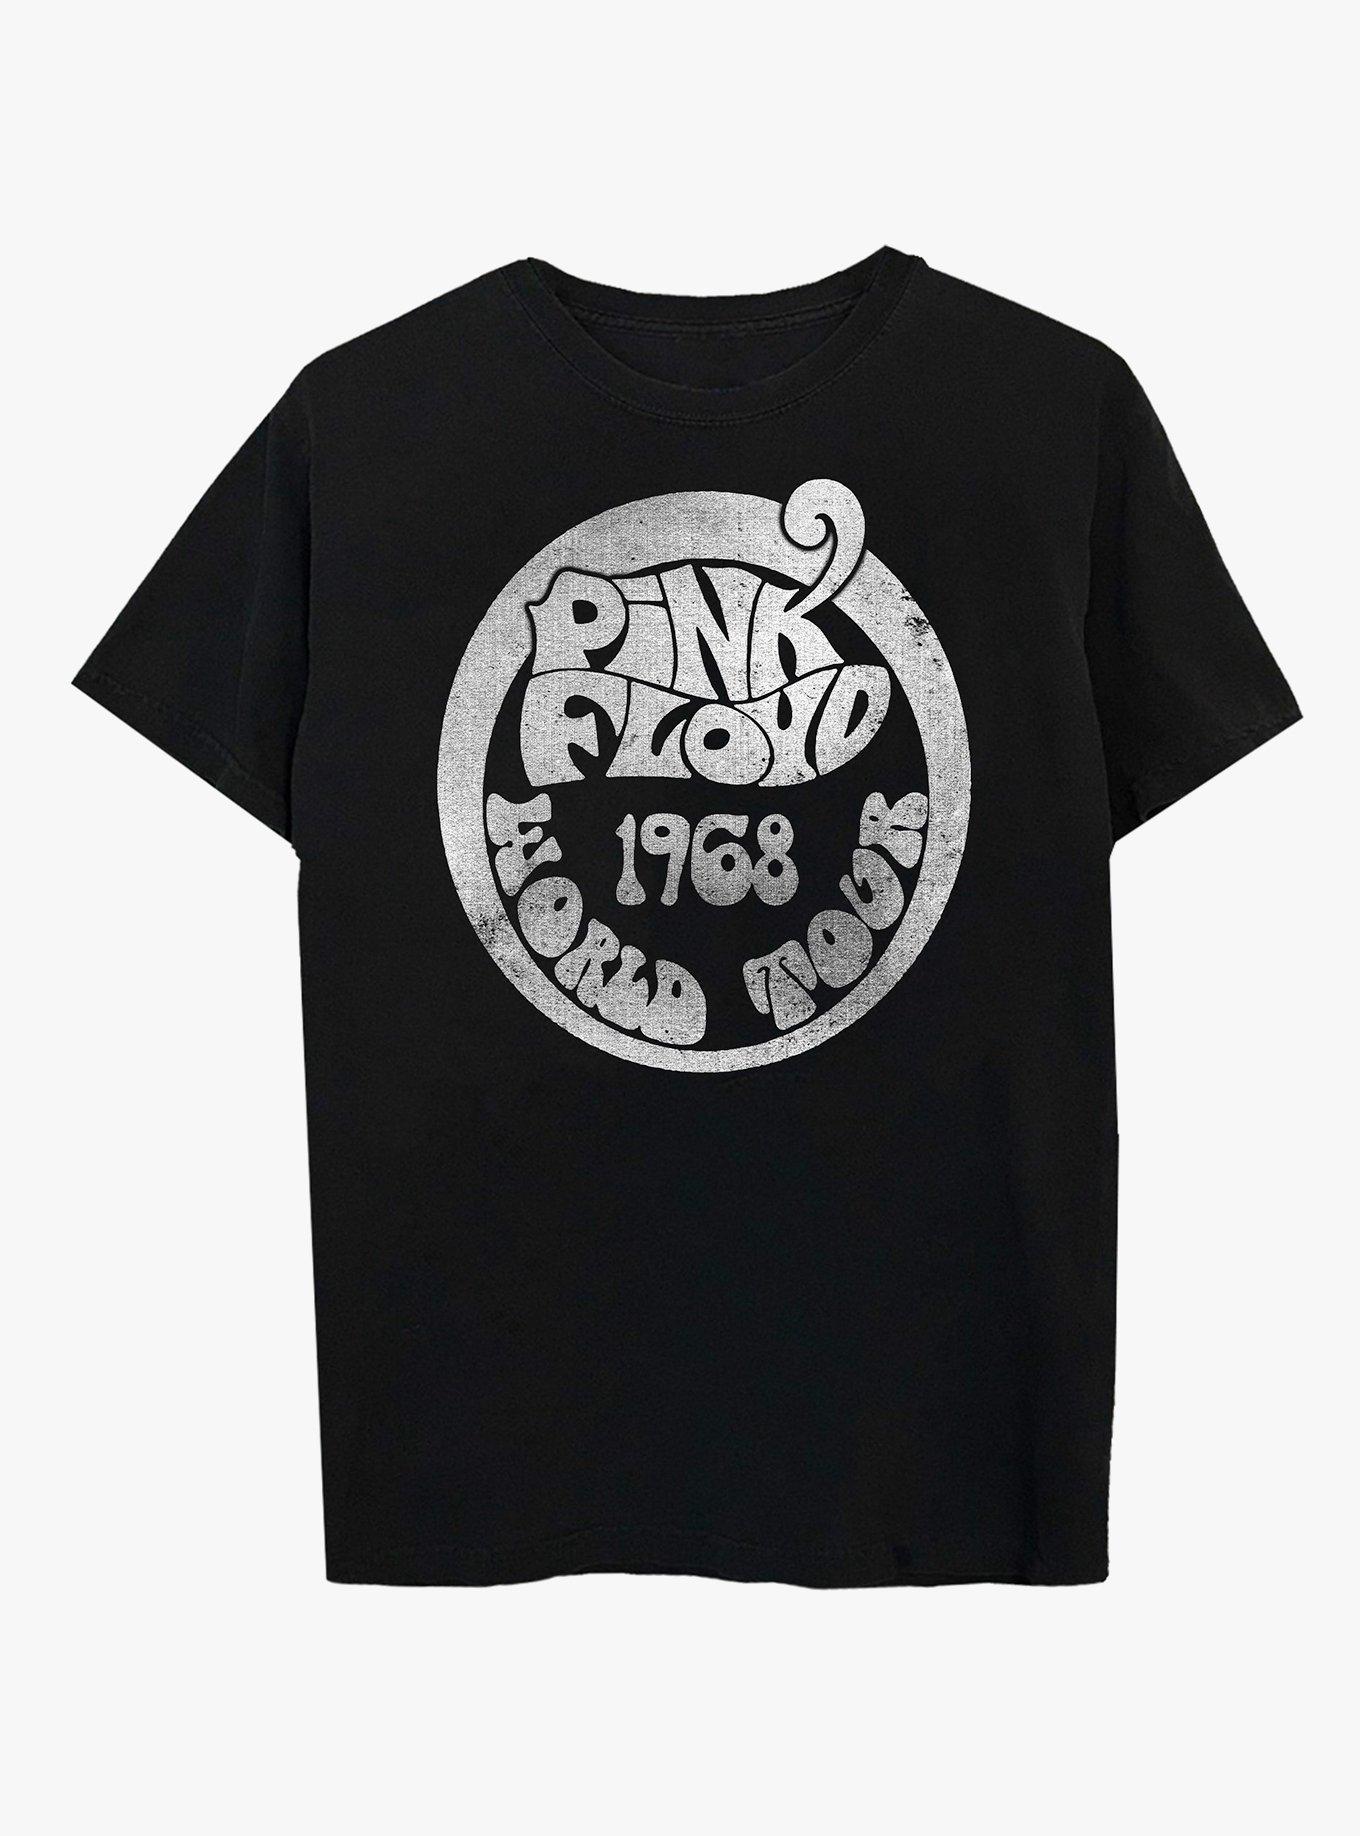 Pink Floyd 1968 World Tour Girls T-Shirt | Hot Topic